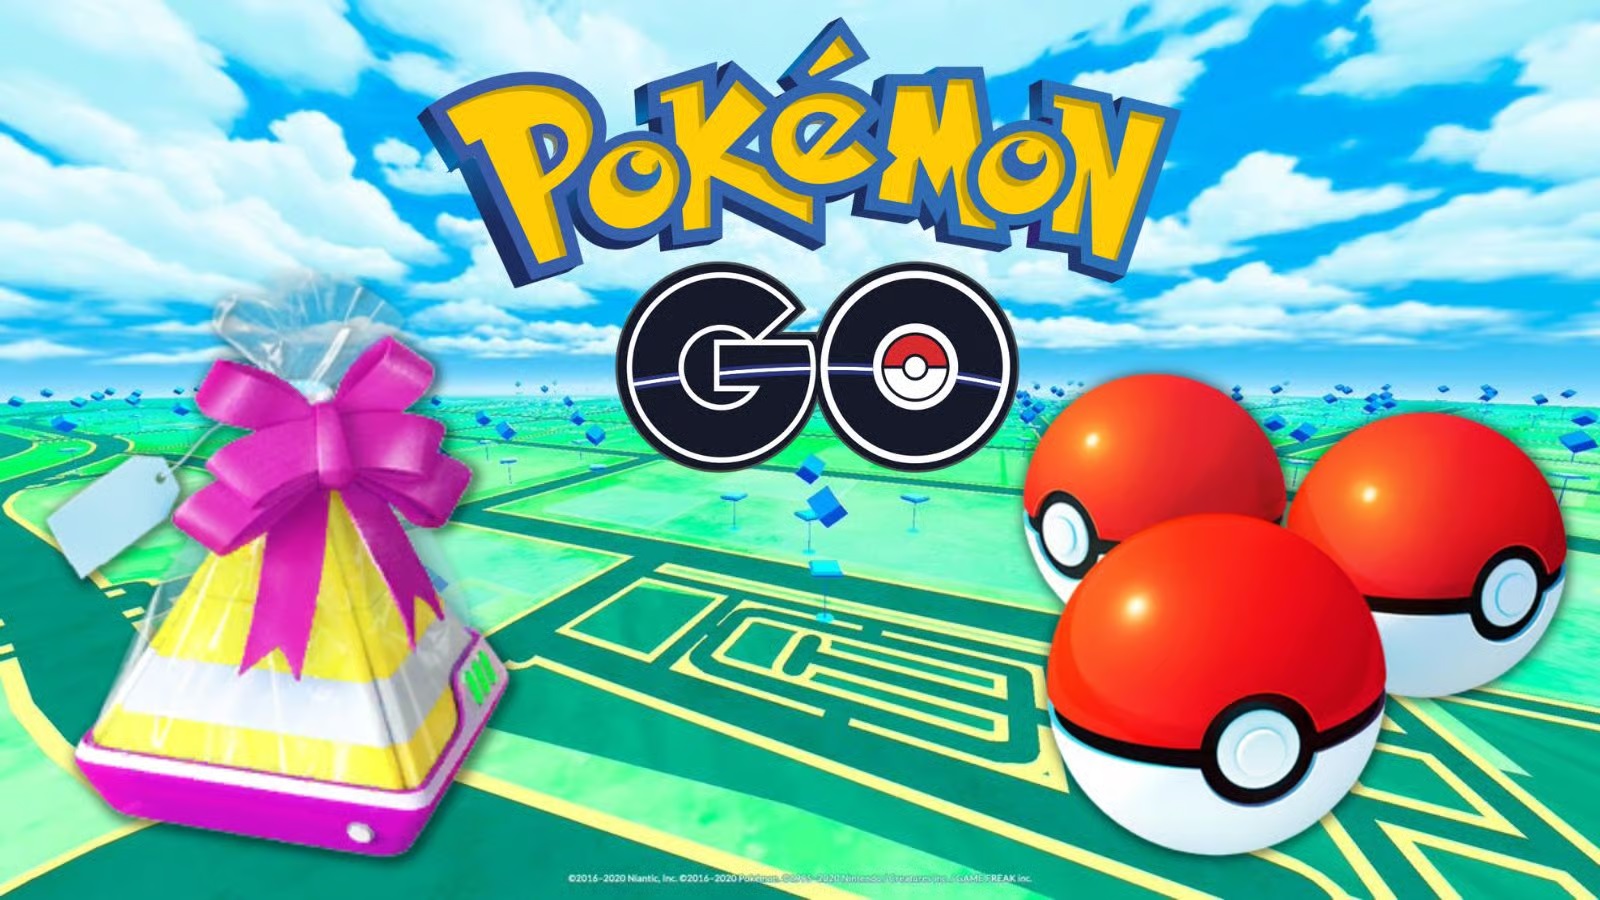 Pokémon Go players are demanding a gift overhaul